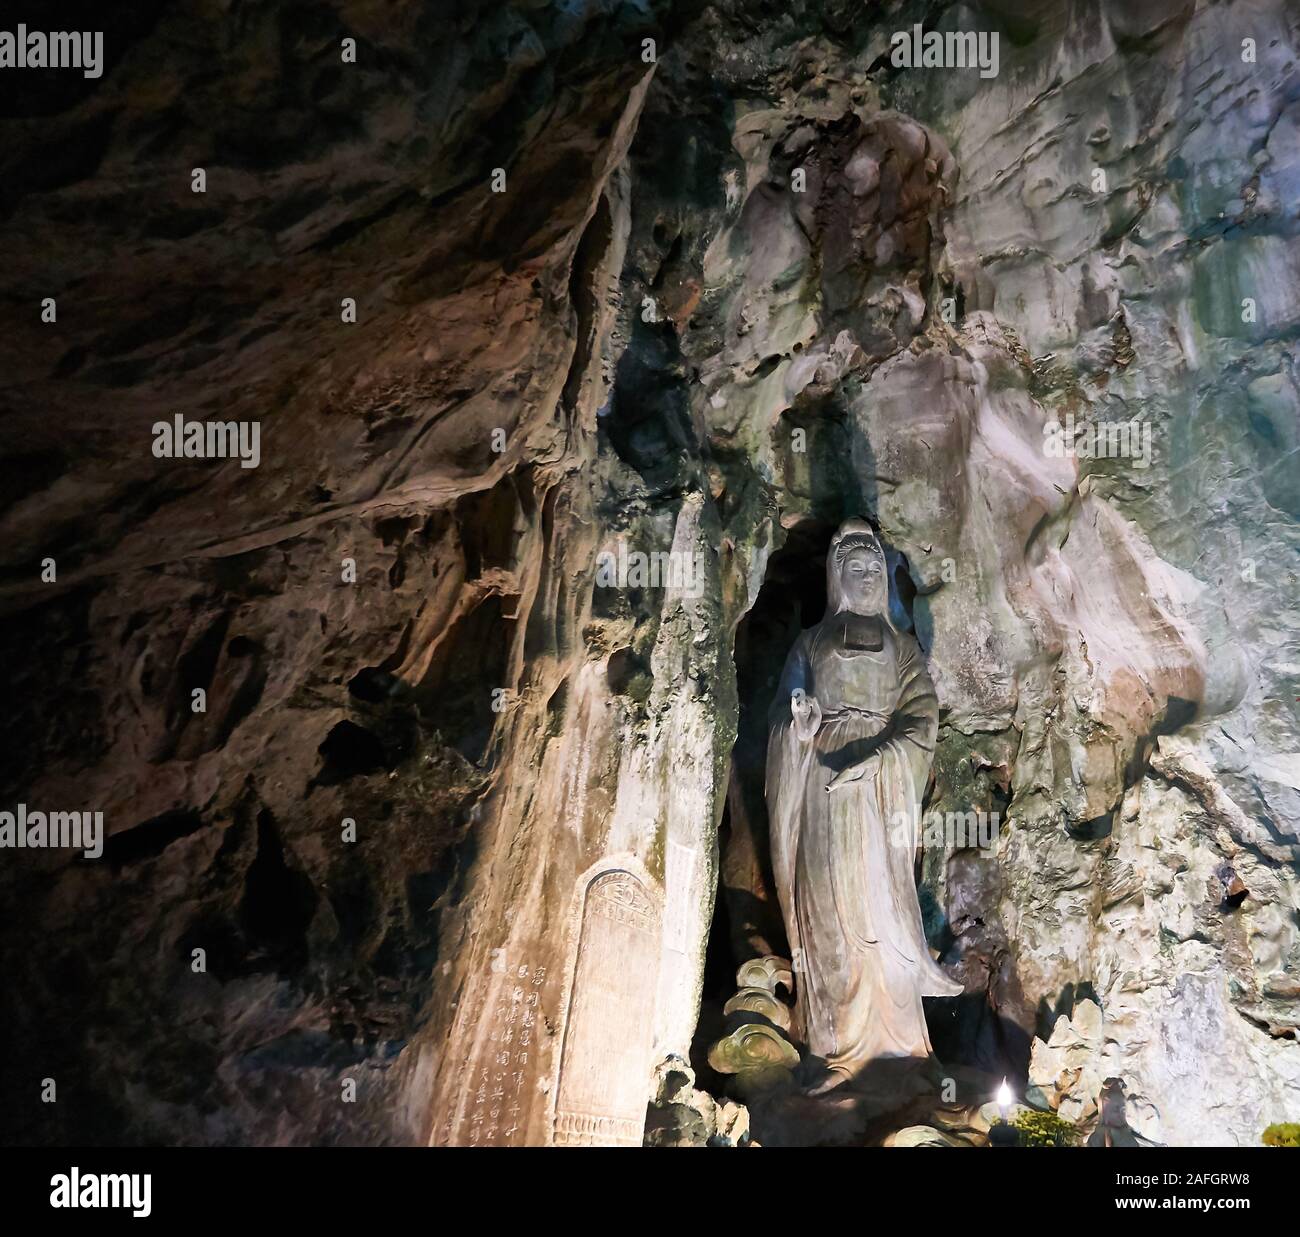 DA NANG, VIETNAM - Novembre 22, 2019: Statua del Buddha in grotta a montagne di marmo, Da Nang, Vietnam Foto Stock